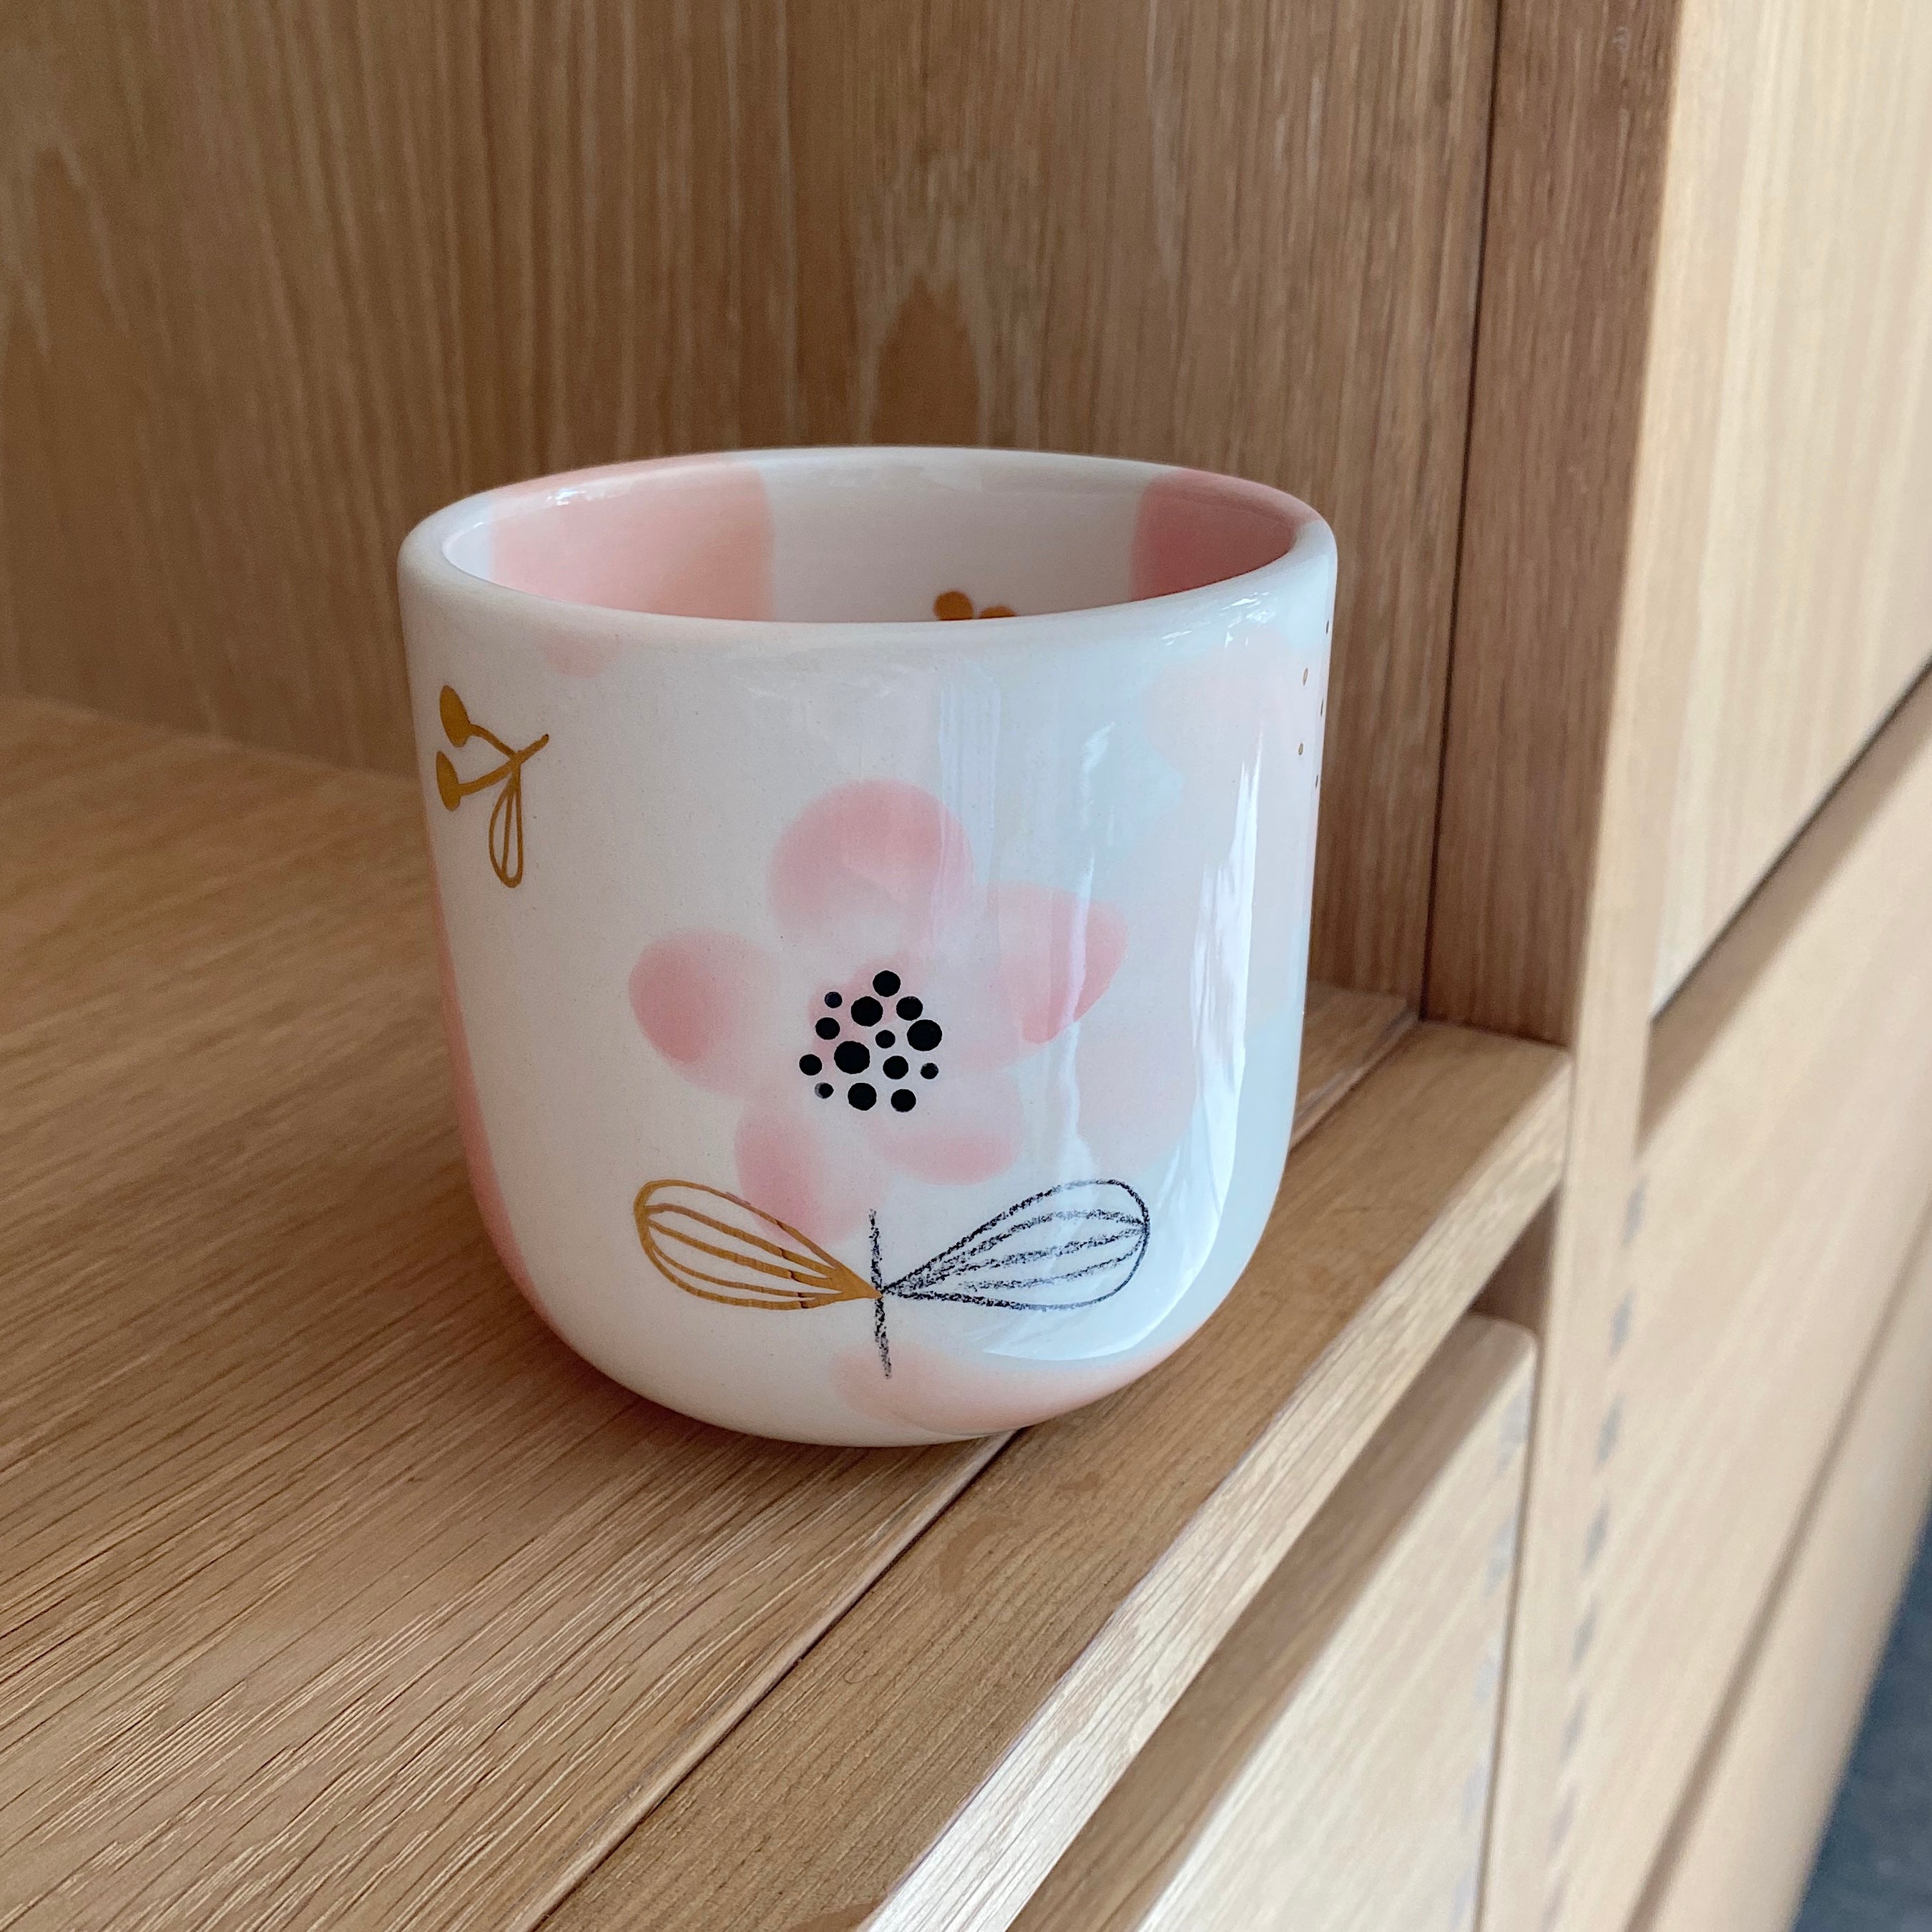 Marinski Heartmades latte kop daydream - blush, light coral and pink flower